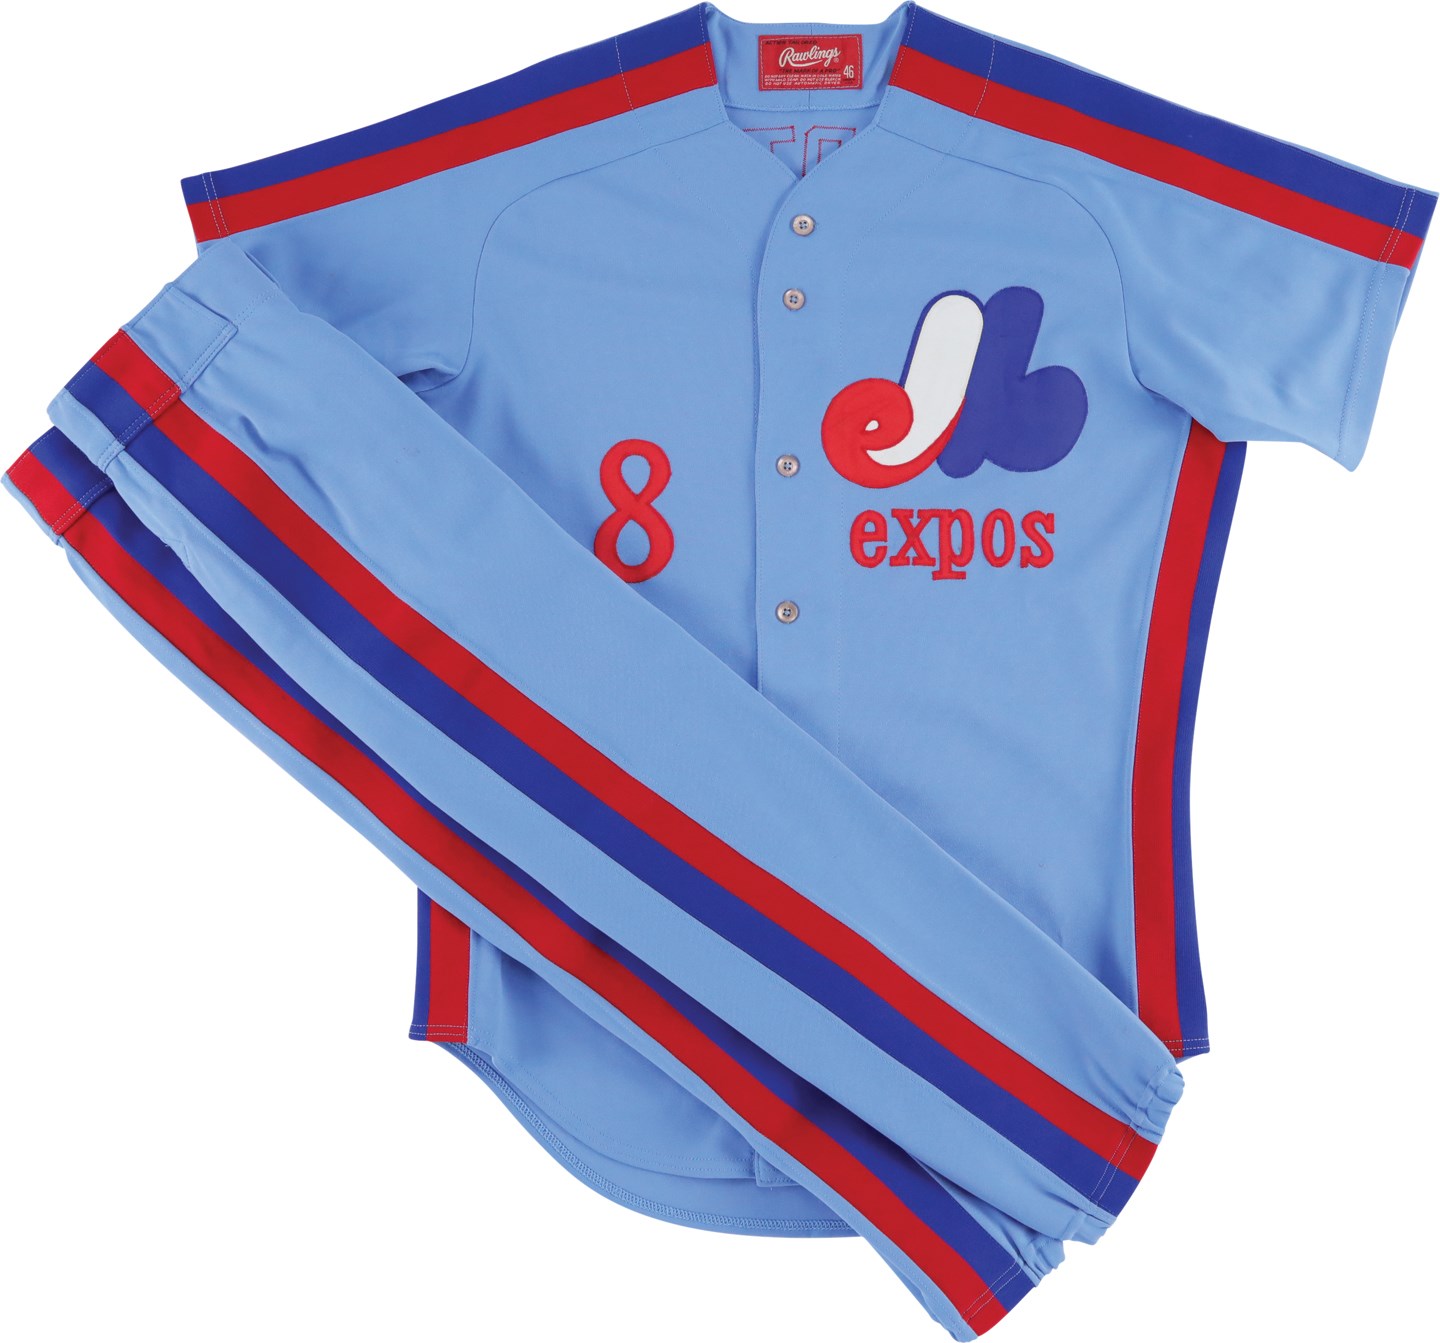 Baseball Equipment - 1981 Gary Carter Montreal Expos Game Worn Uniform